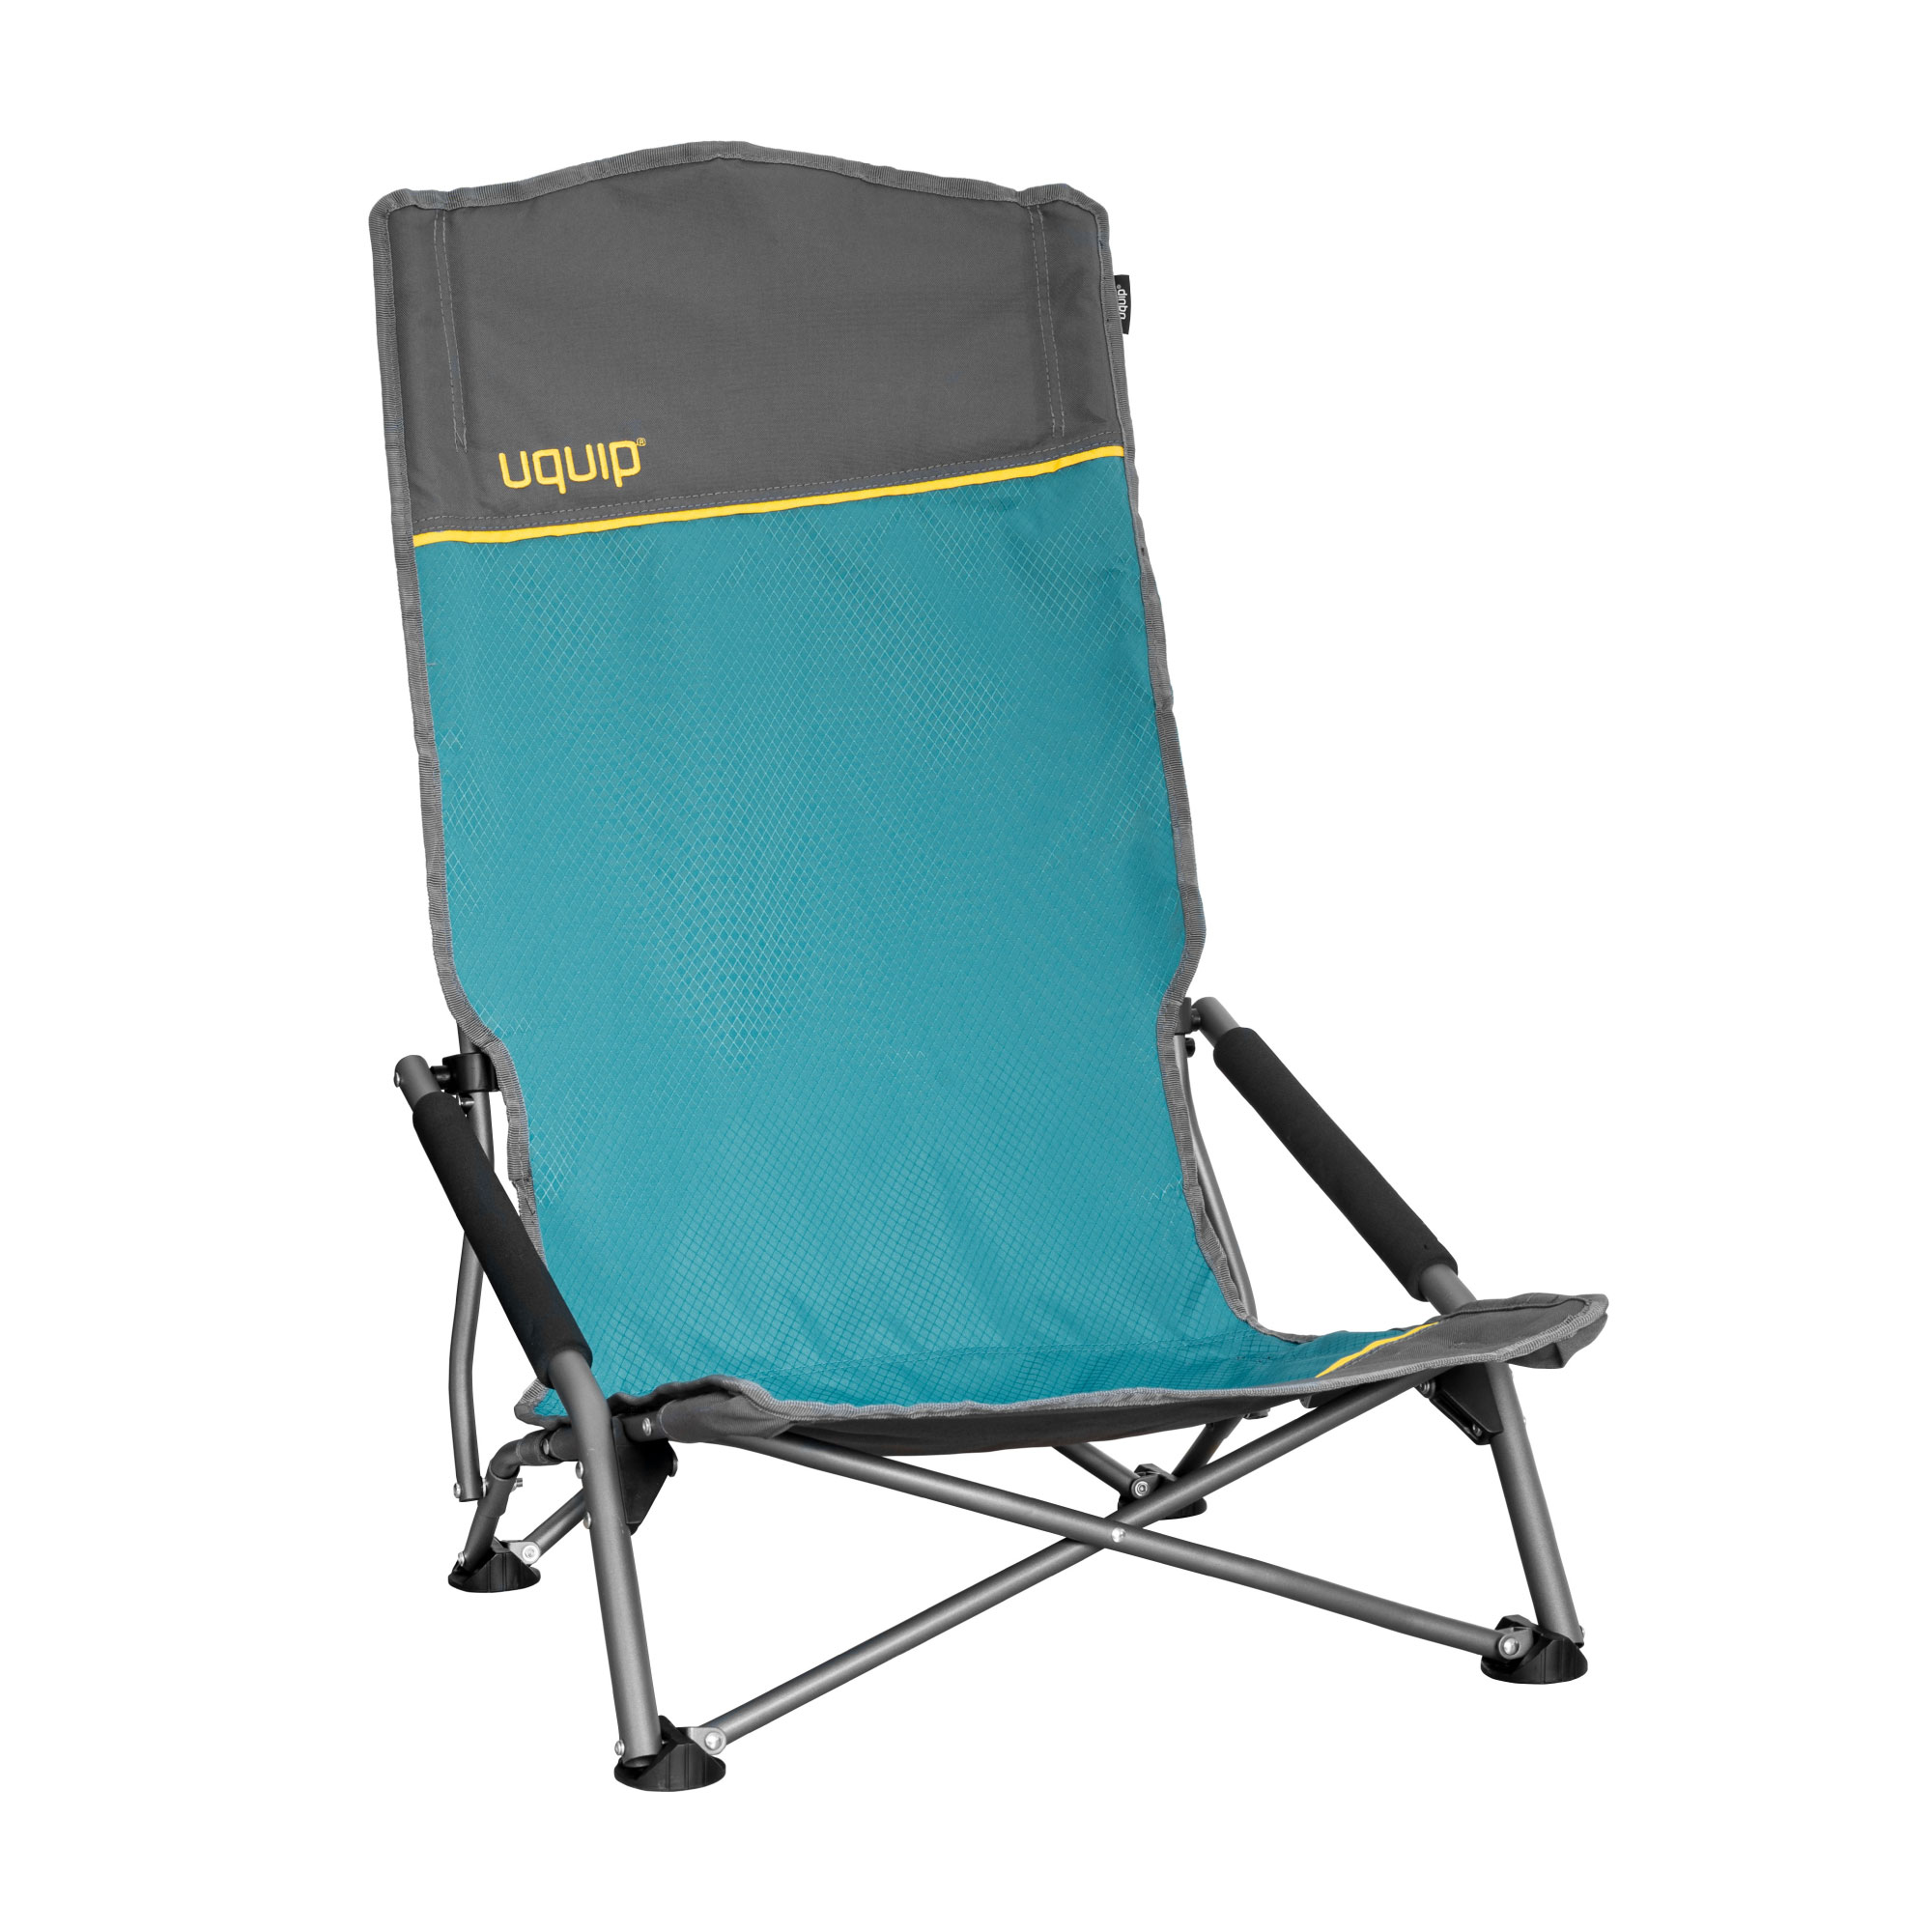 Lounge-Charakter hohe Rückenlehne Blau Uquip Sidney Campingstuhl bis 120 